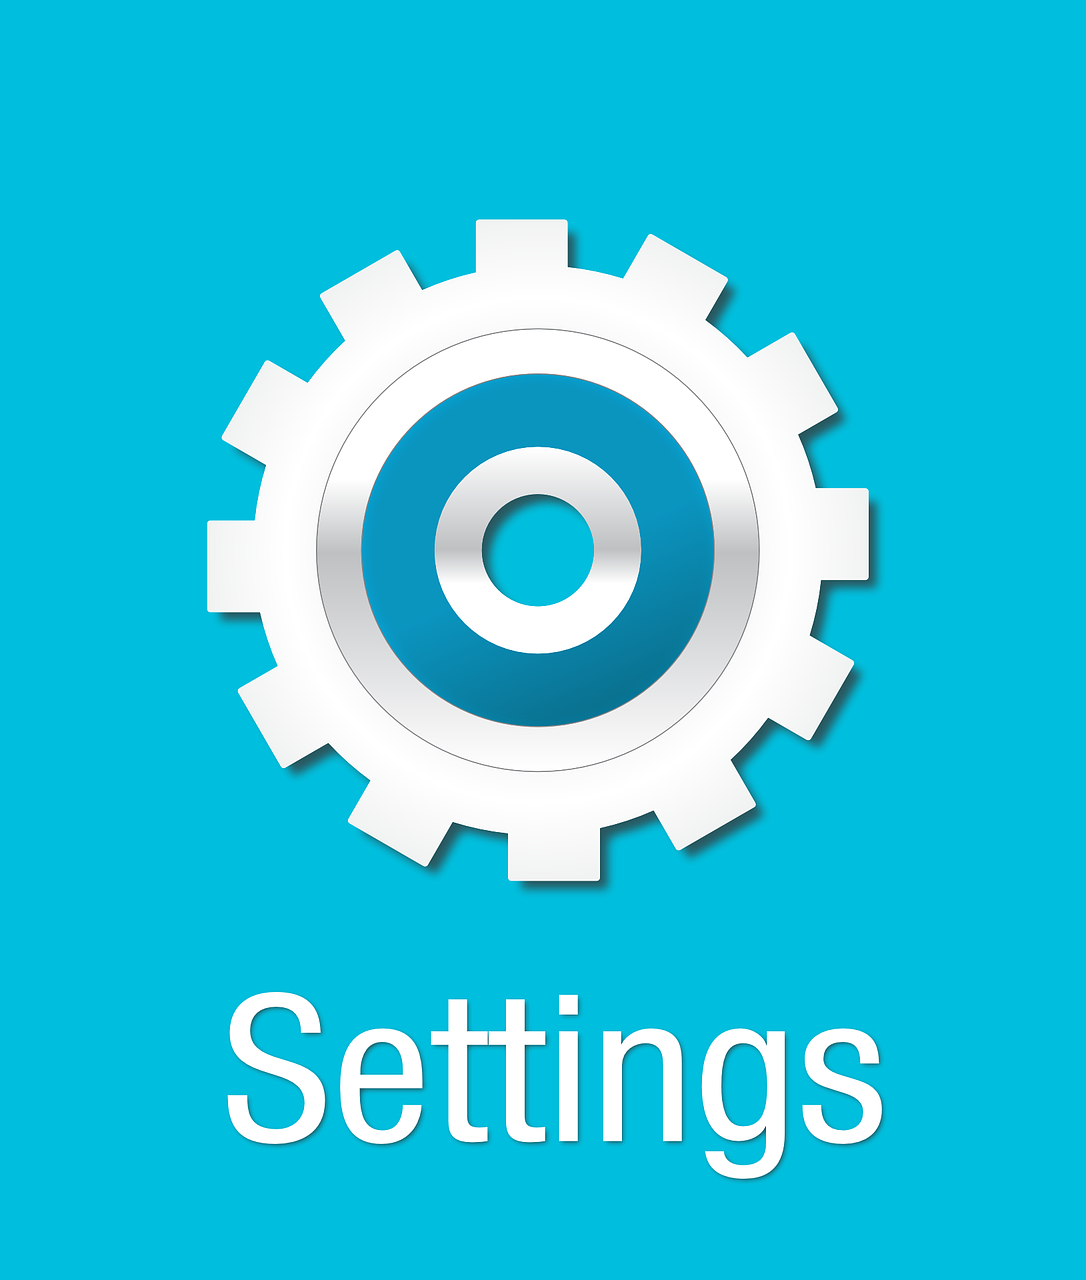 settings gears icon free photo